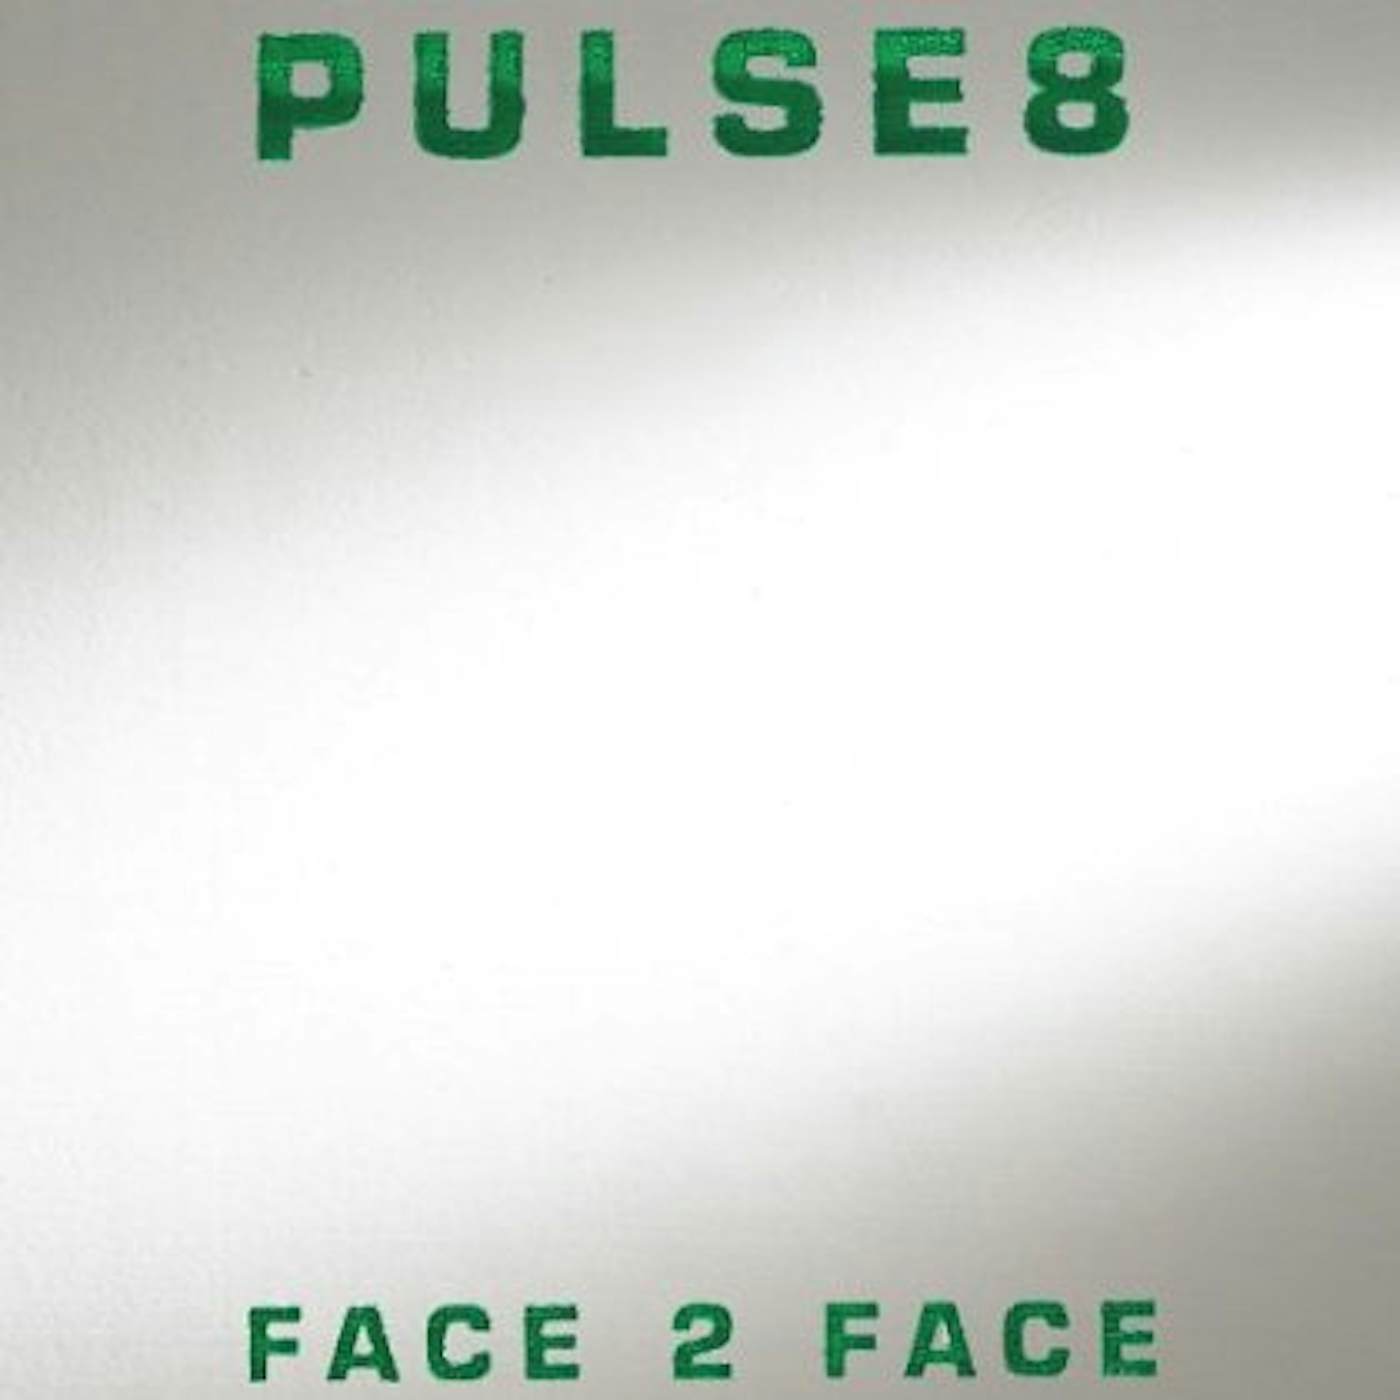 Pulse8 FACE 2 FACE CD